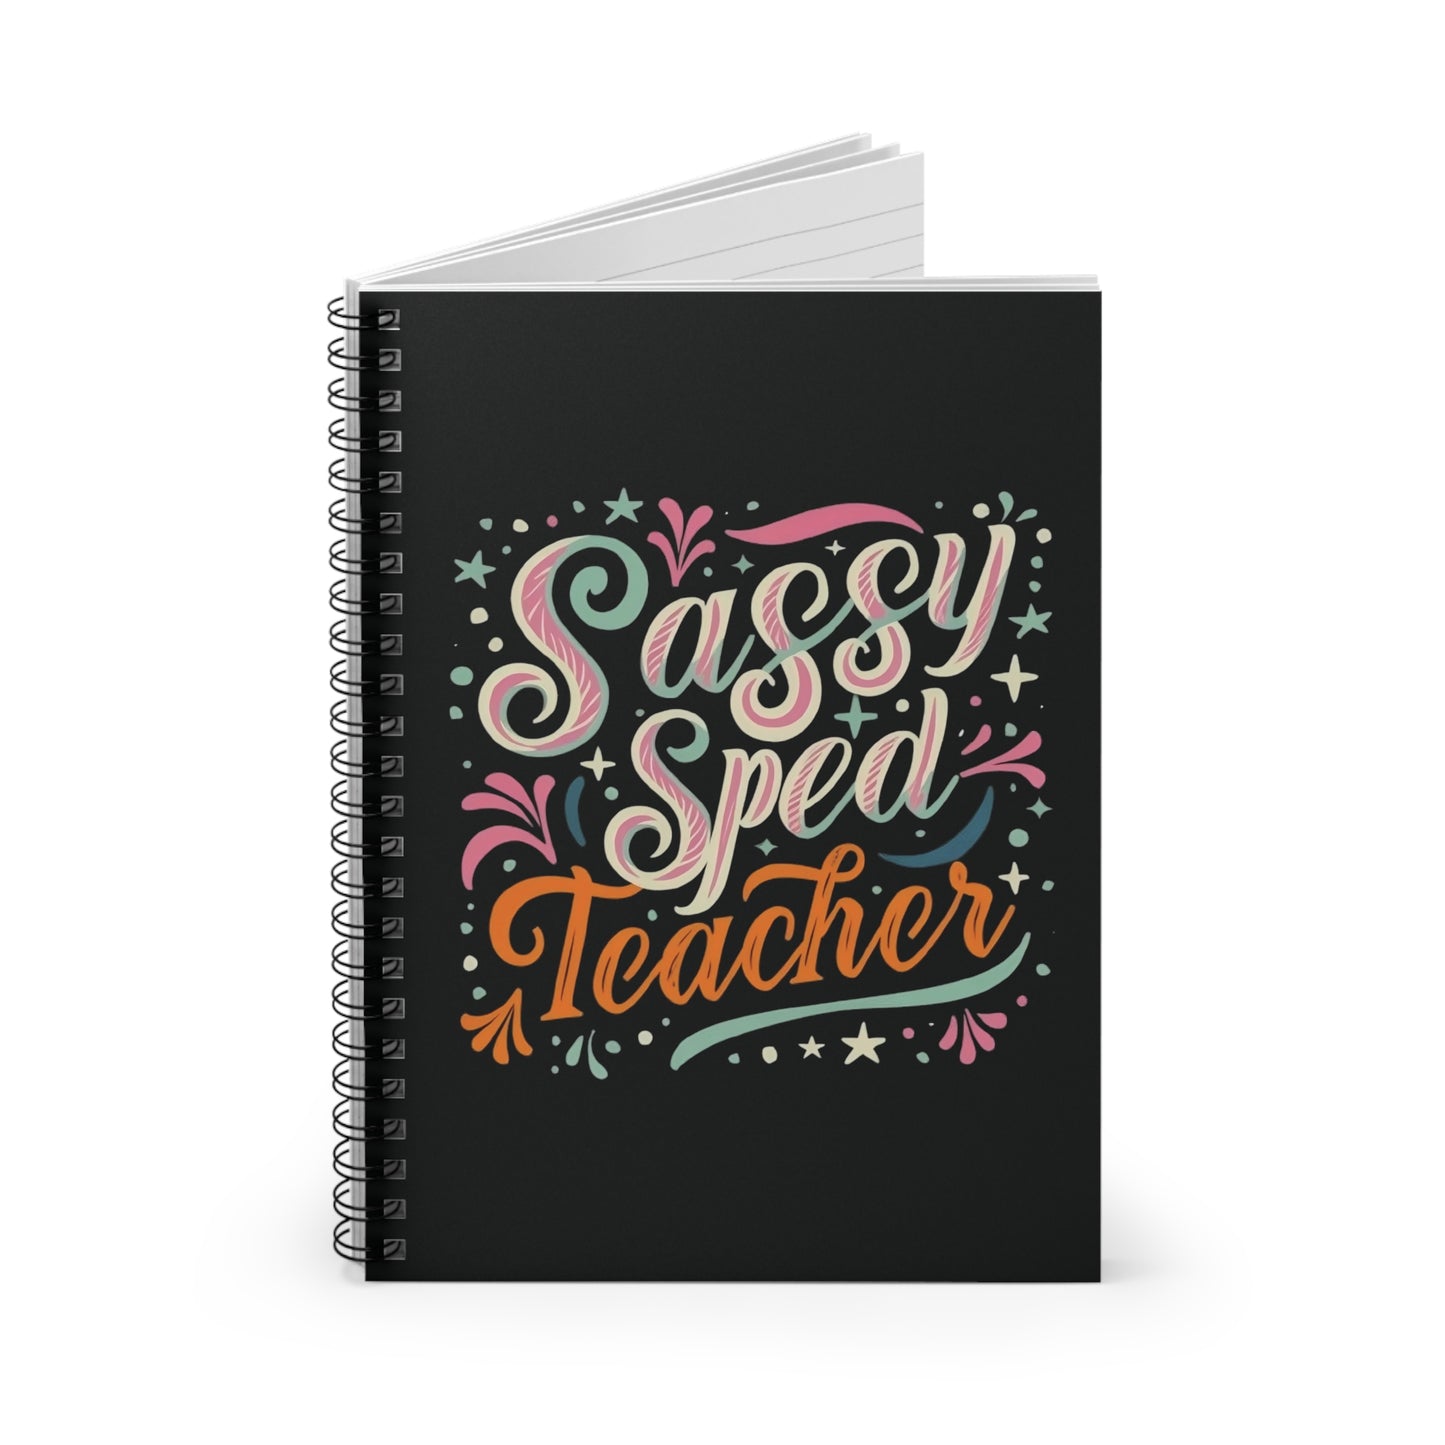 Special Ed Teacher Spiral Notebook - "Sassy Sped Teacher"